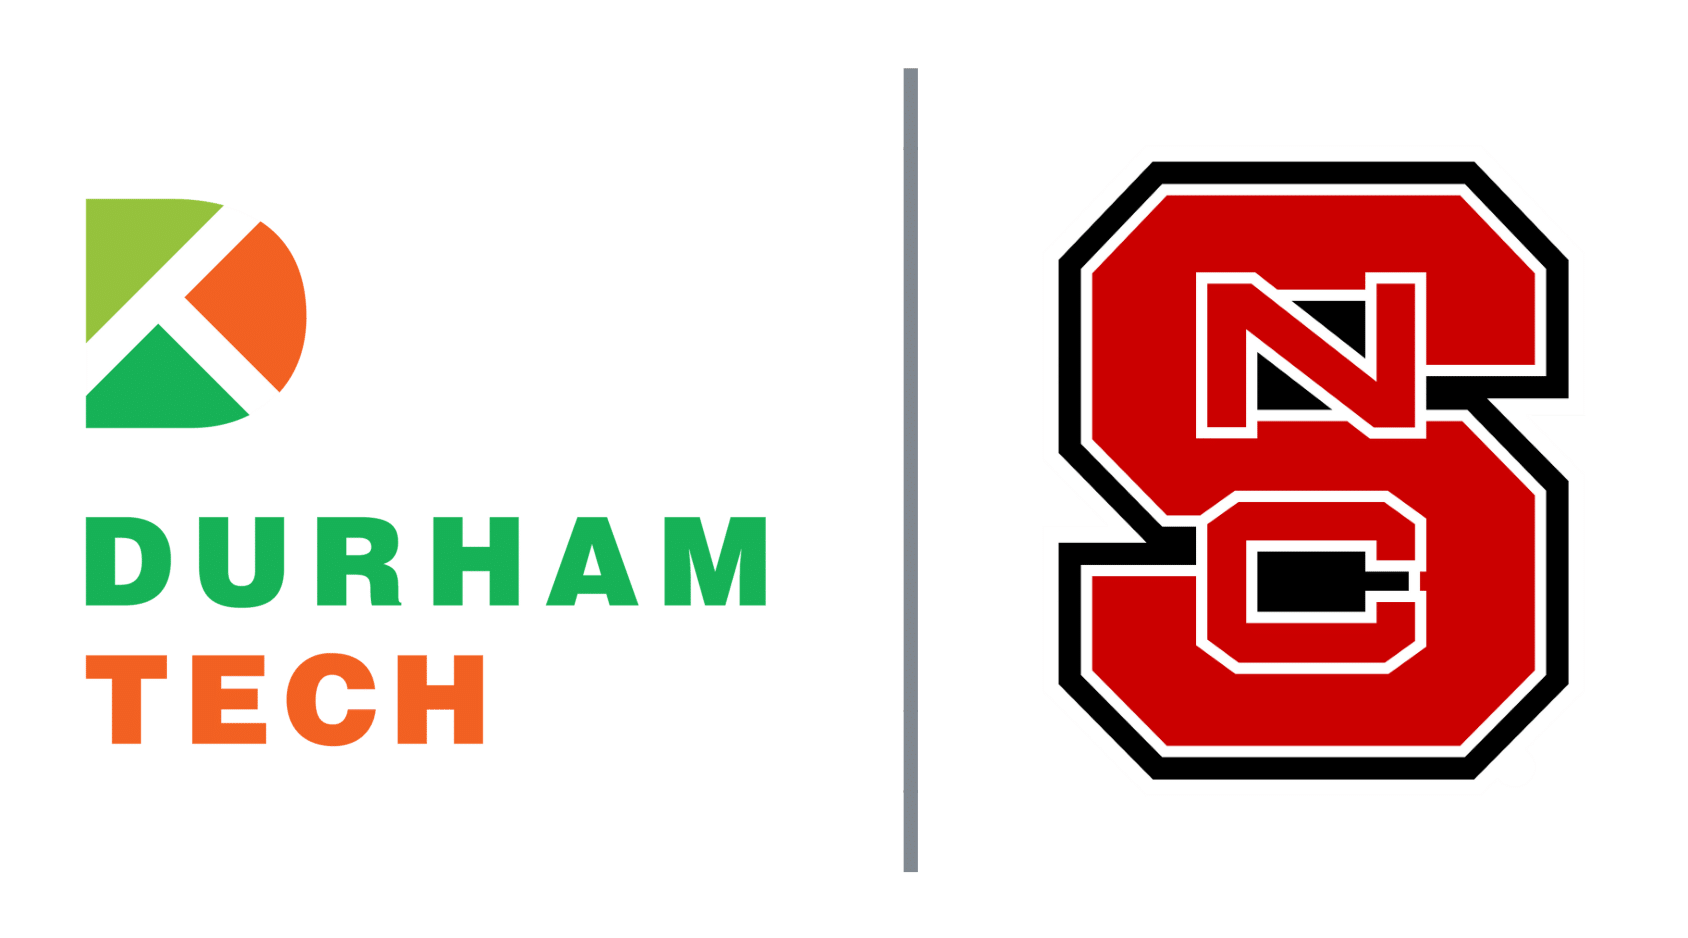 durham tech logo and nc state logo